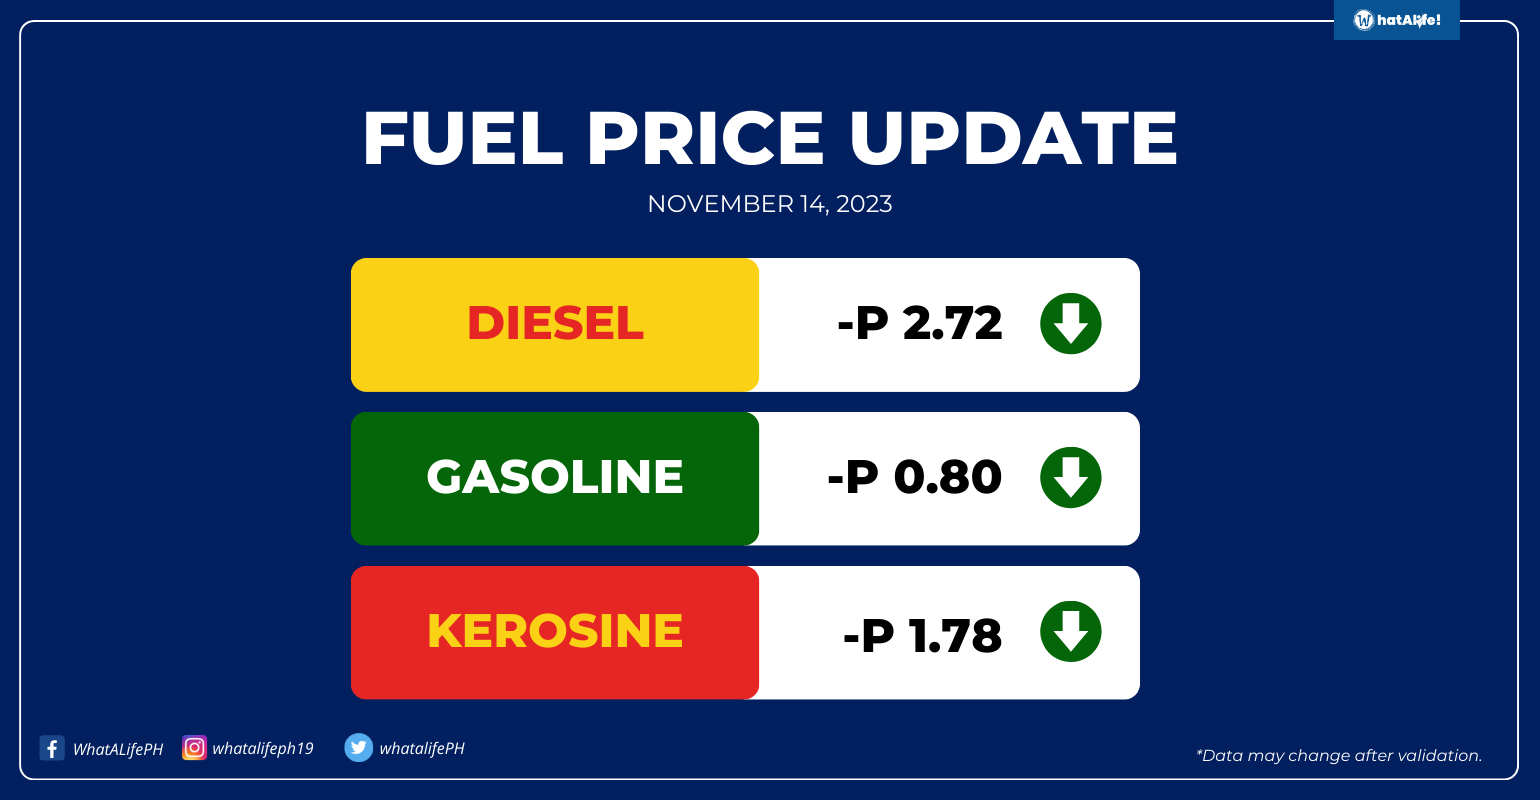 Fuel price rollback effective November 14, 2023